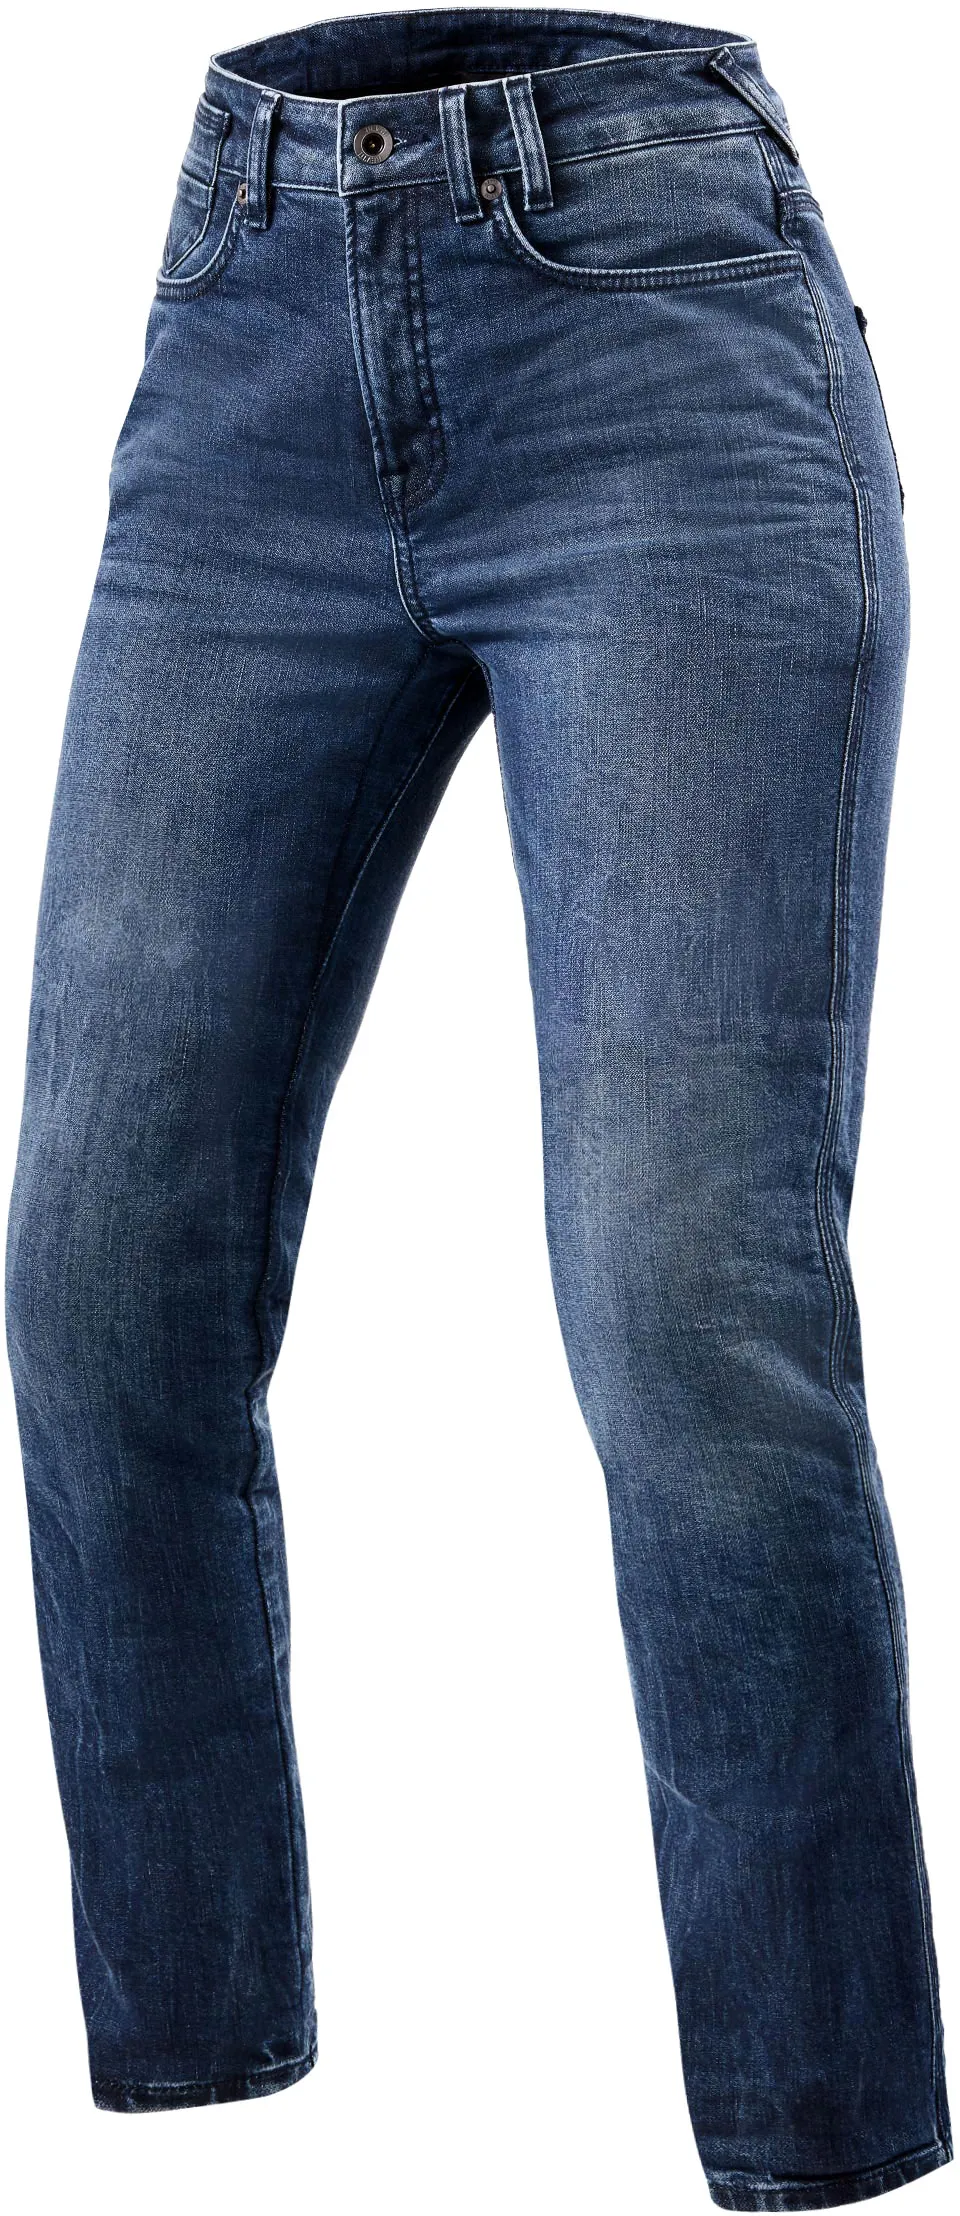 Revit Victoria 2, jeans femmes - Bleu - W26/L32